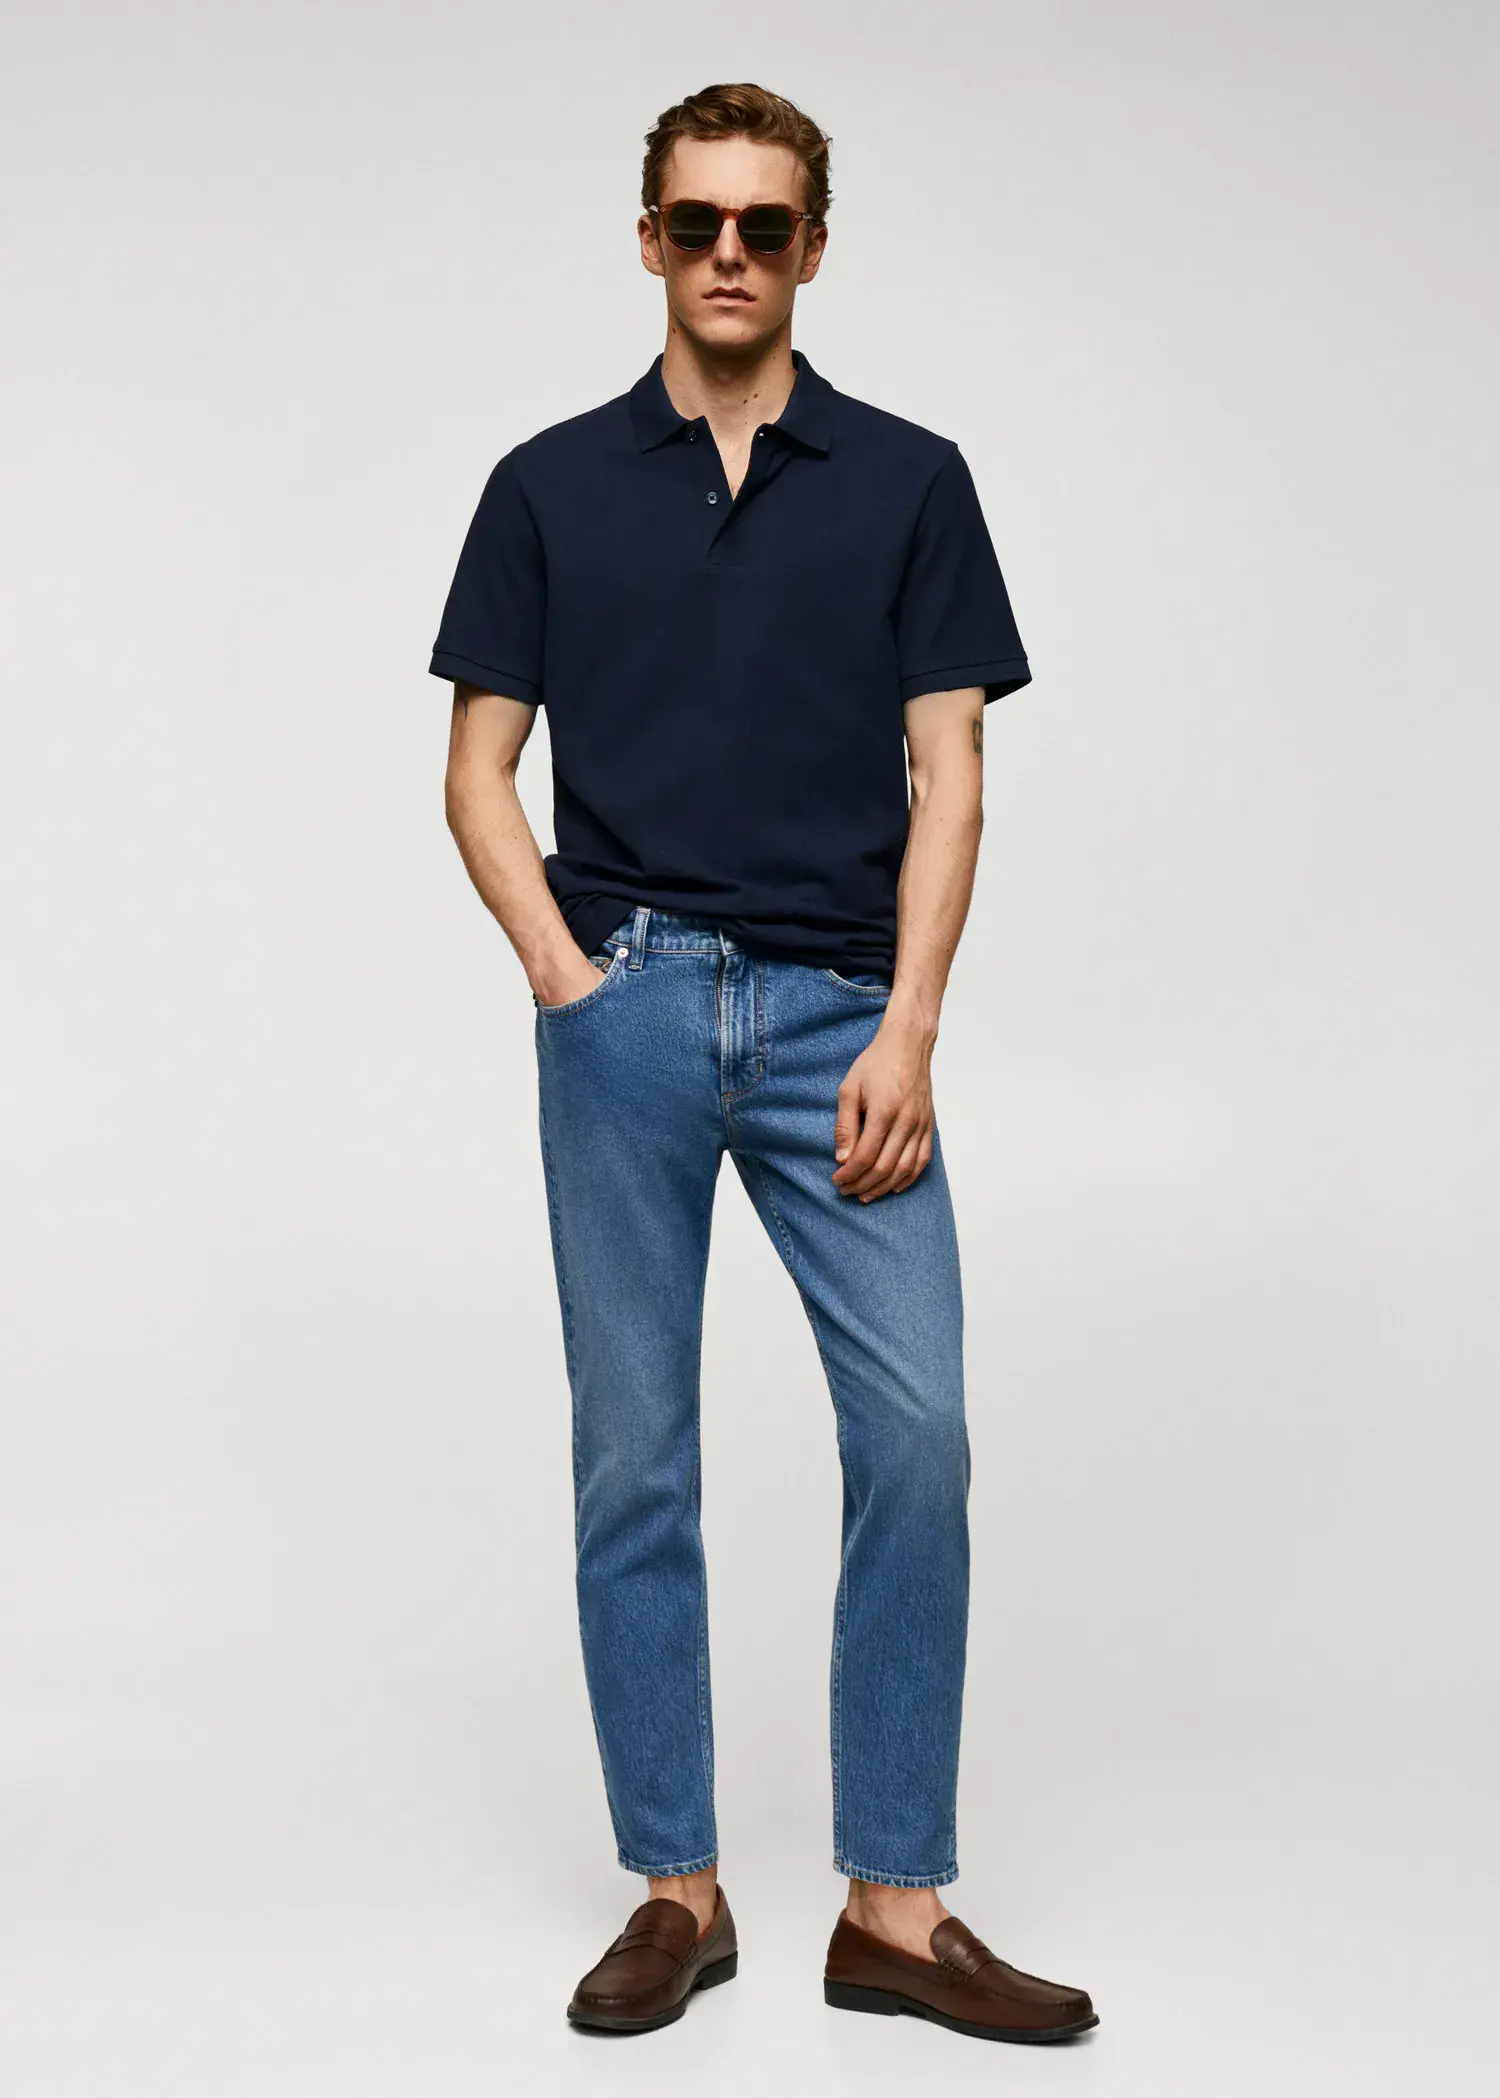 Mango 100% cotton pique polo shirt. a man in a black polo shirt and blue jeans. 